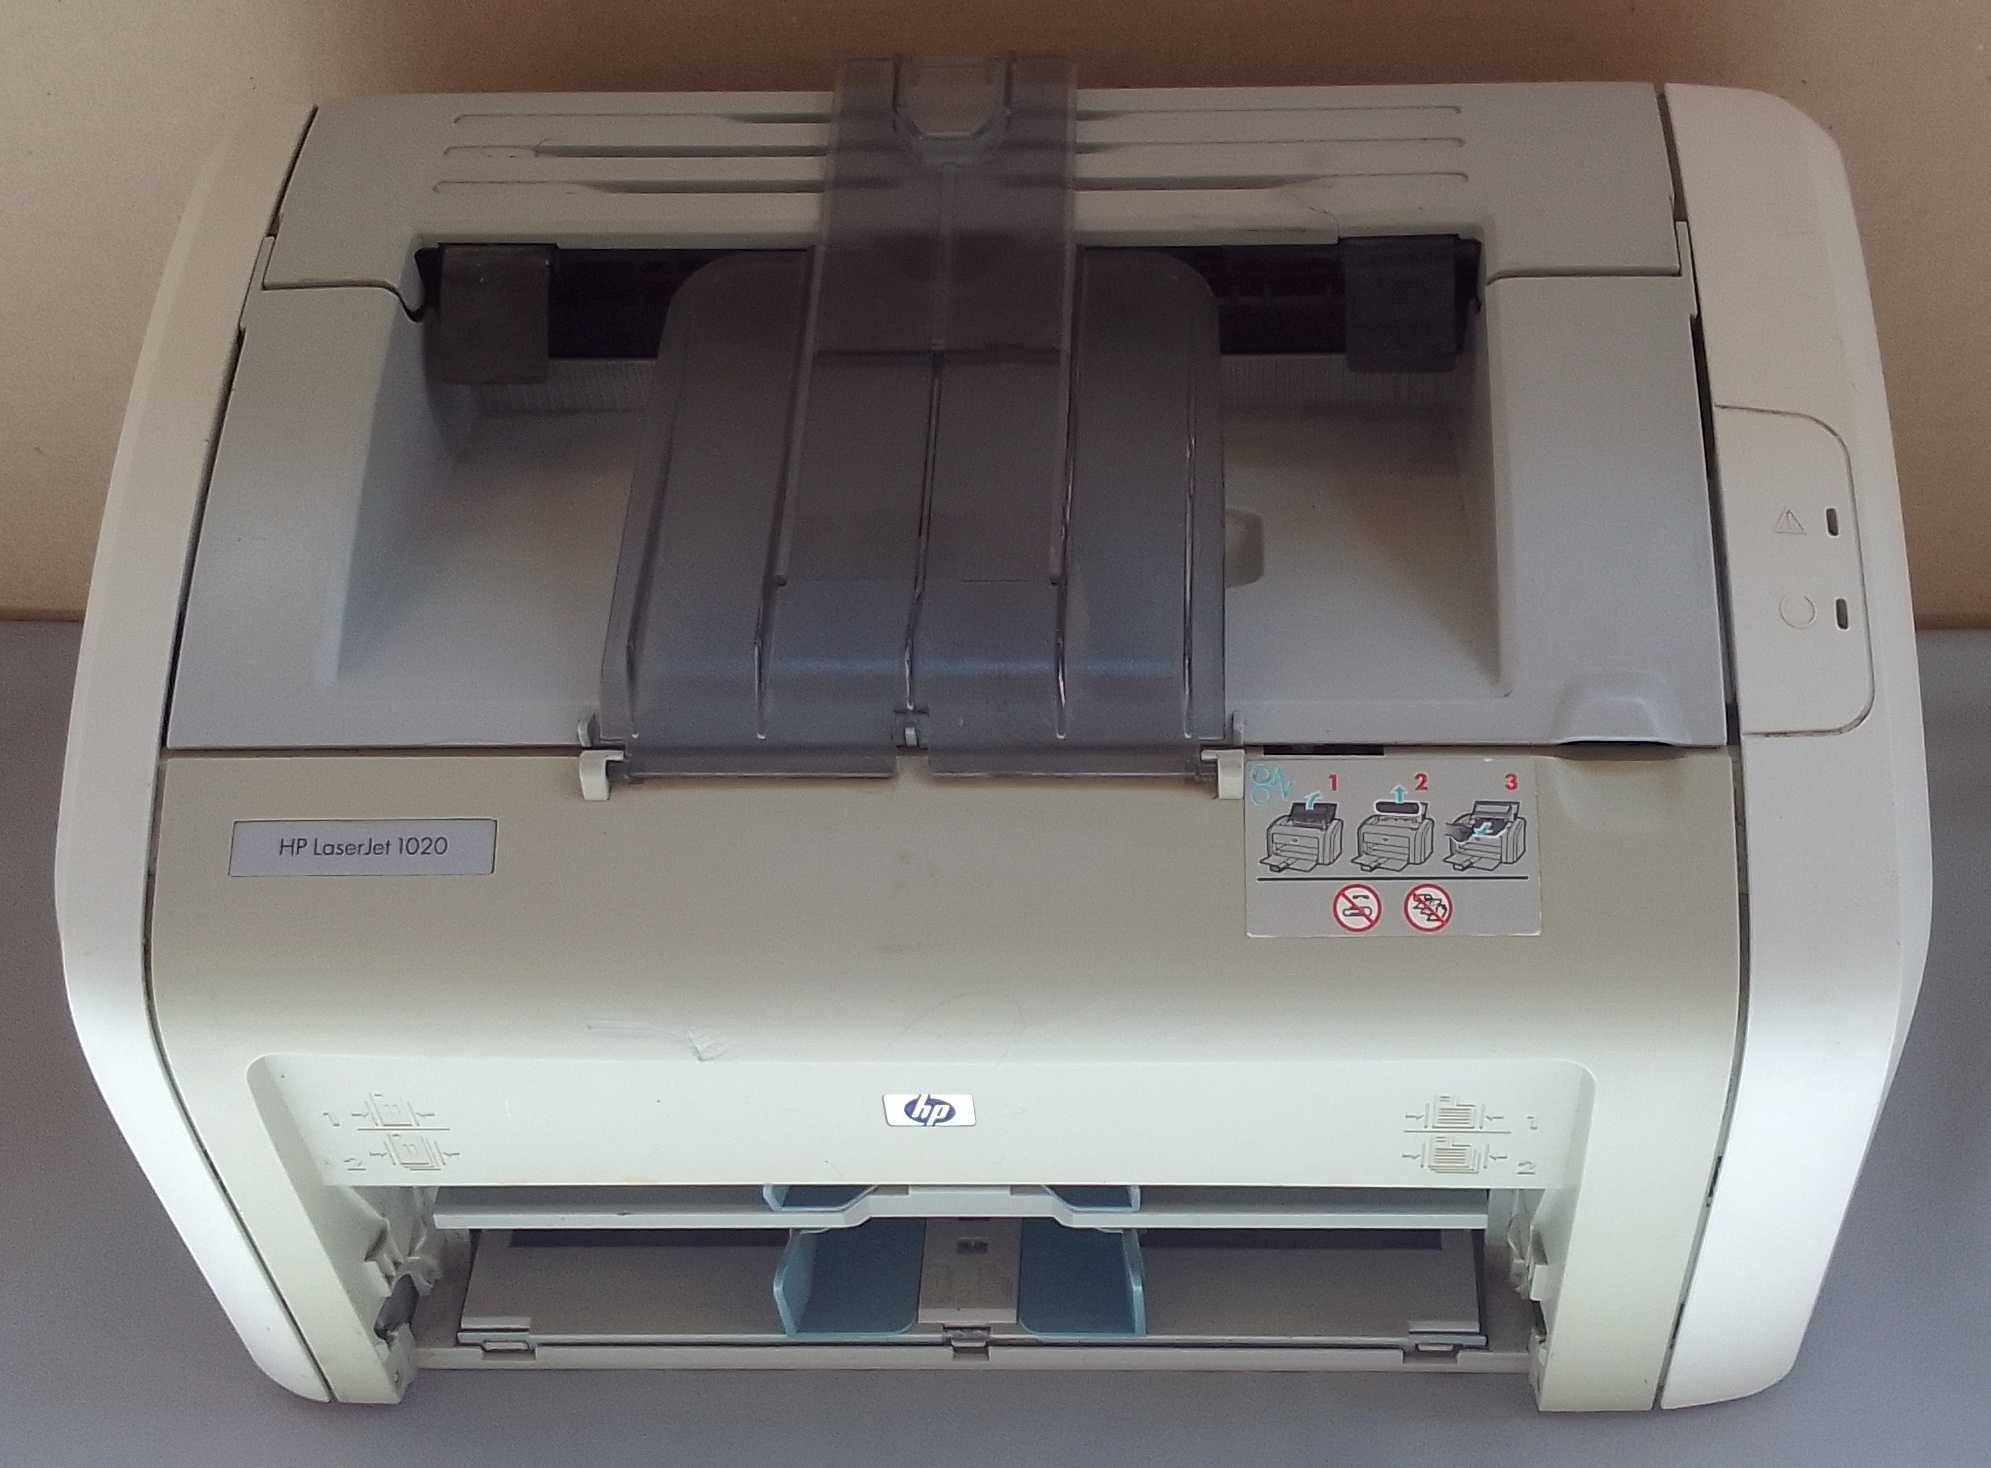 Принтер HP1010 HP1012 HP1015 HP1020 HP1022 - детали узлы принтера